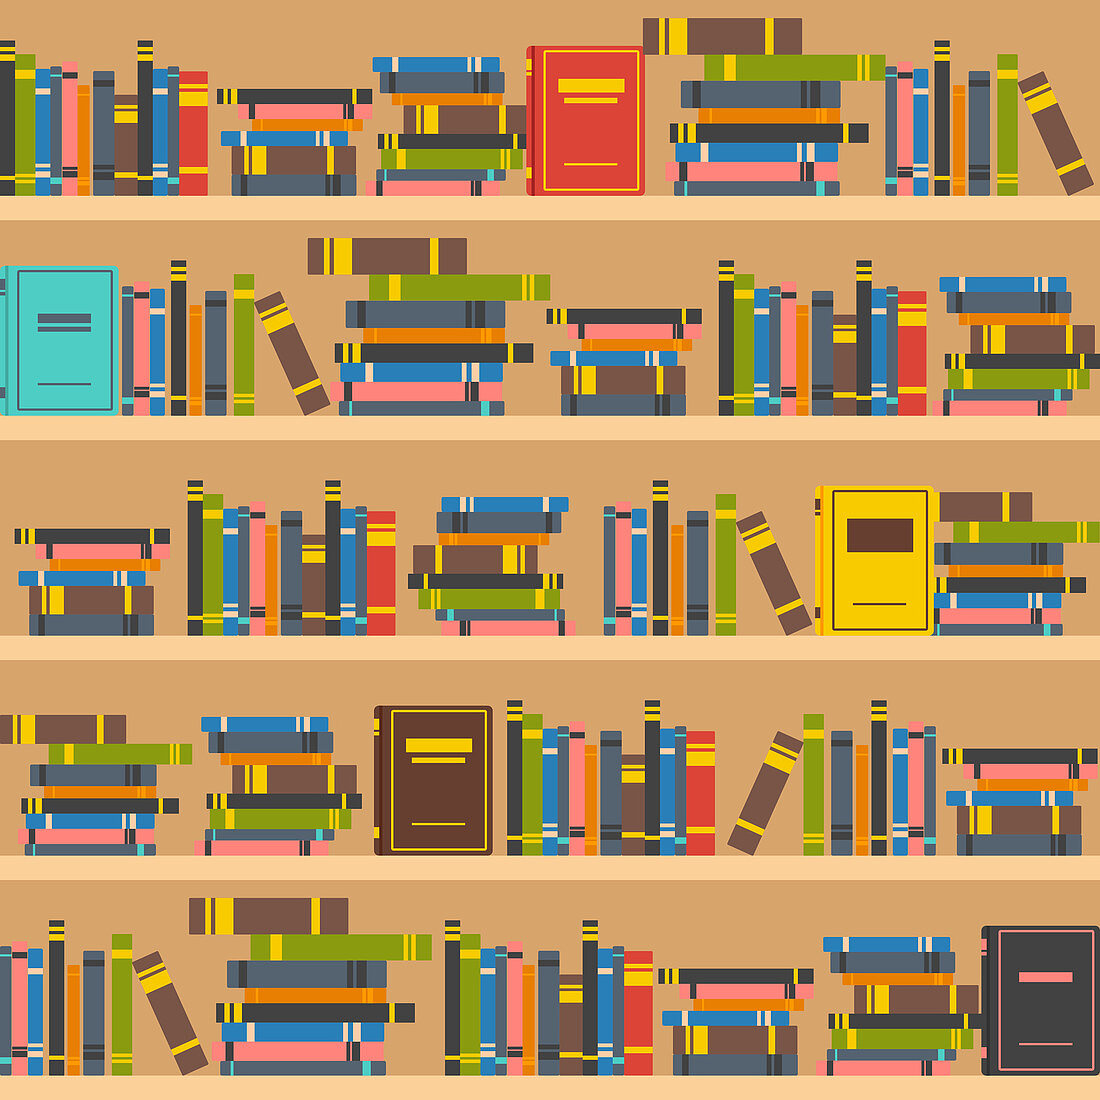 Book shelves, illustration